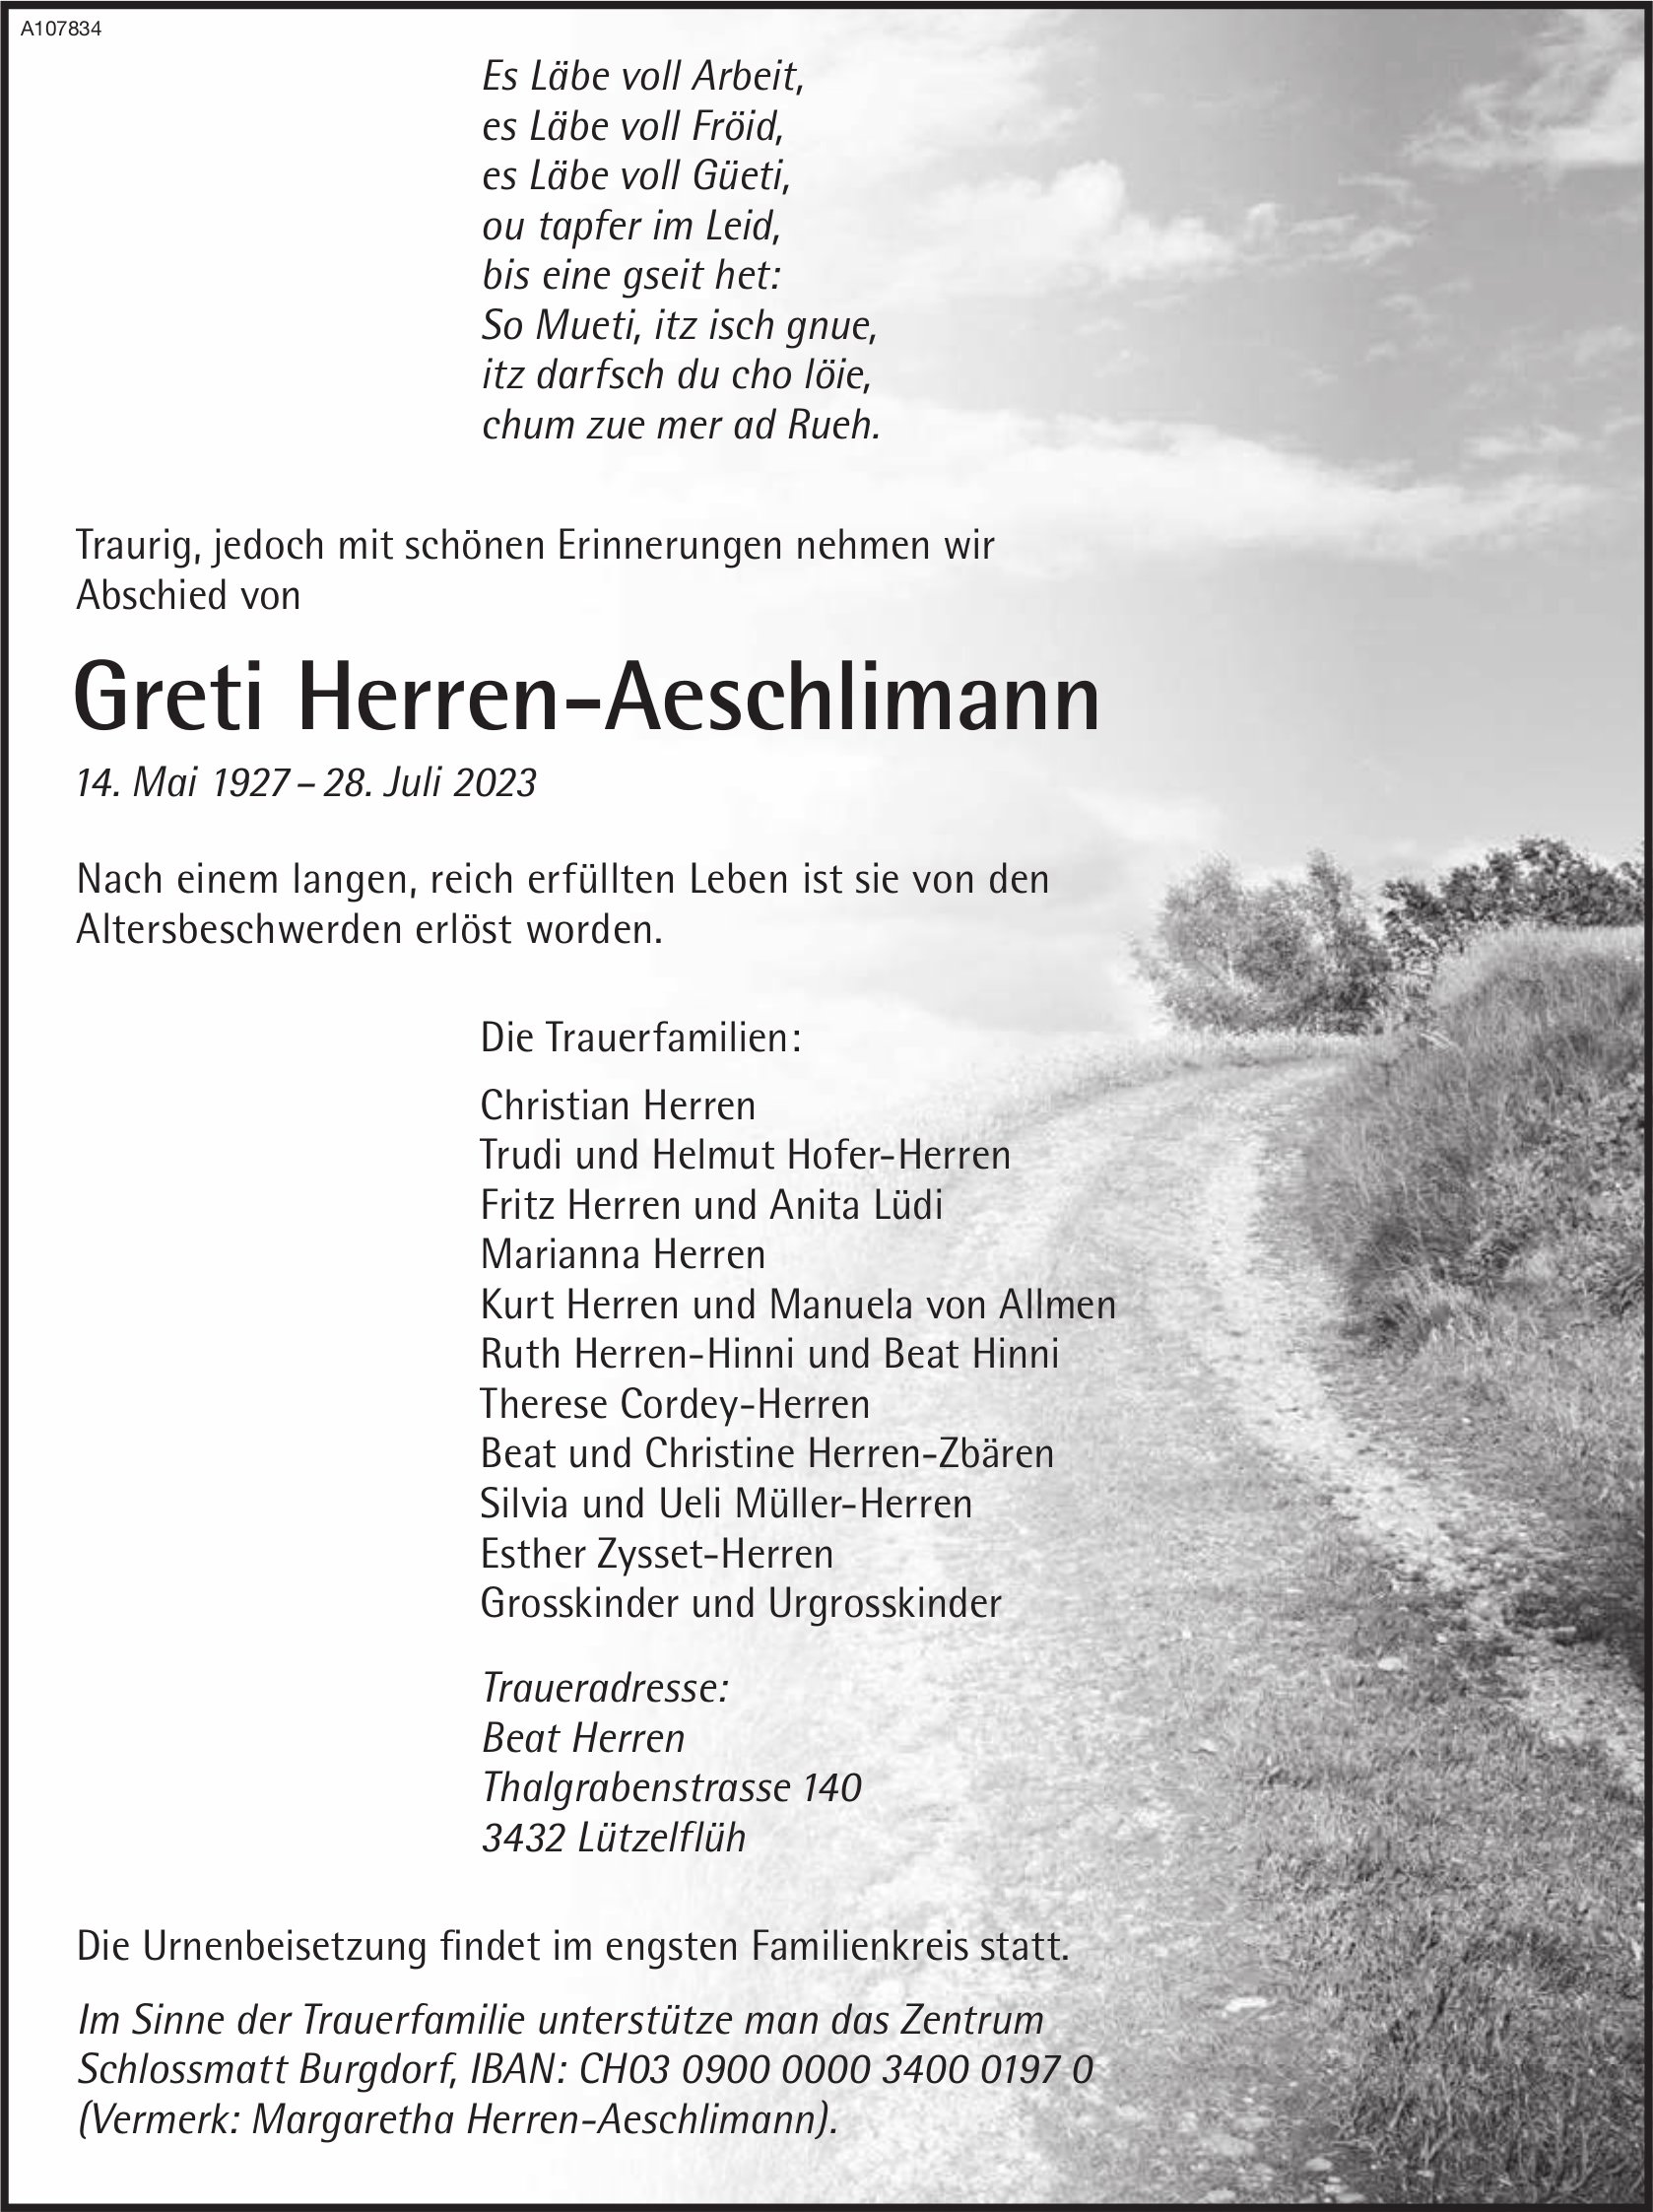 Greti Herren-Aeschlimann, Juli 2023 / TA